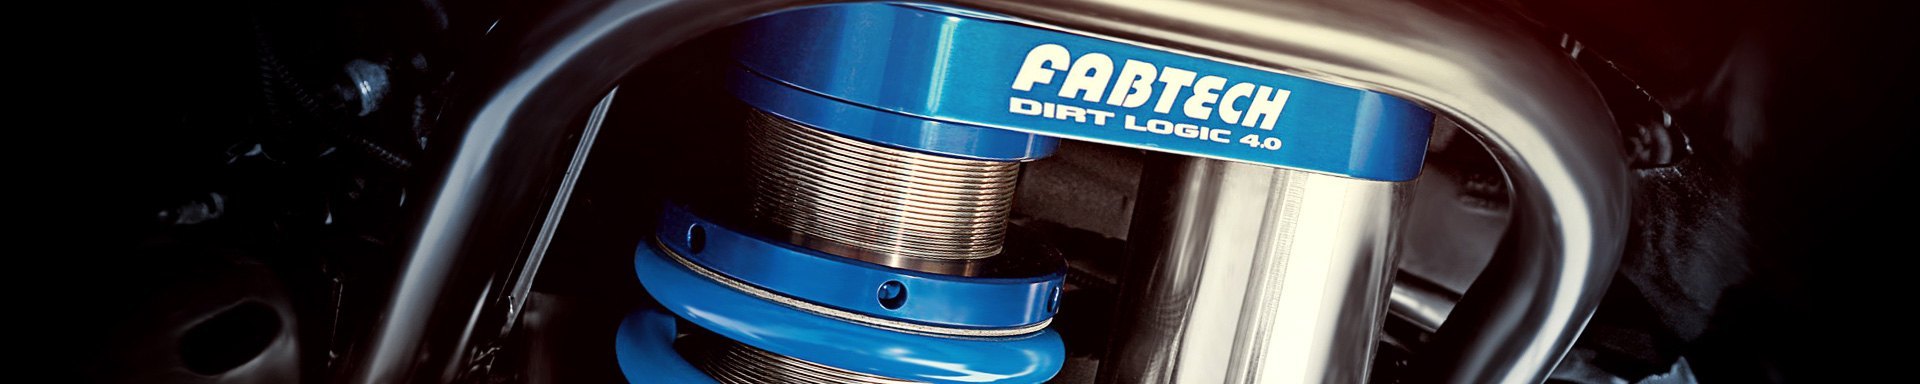 Fabtech Suspension & Steering Service Tools